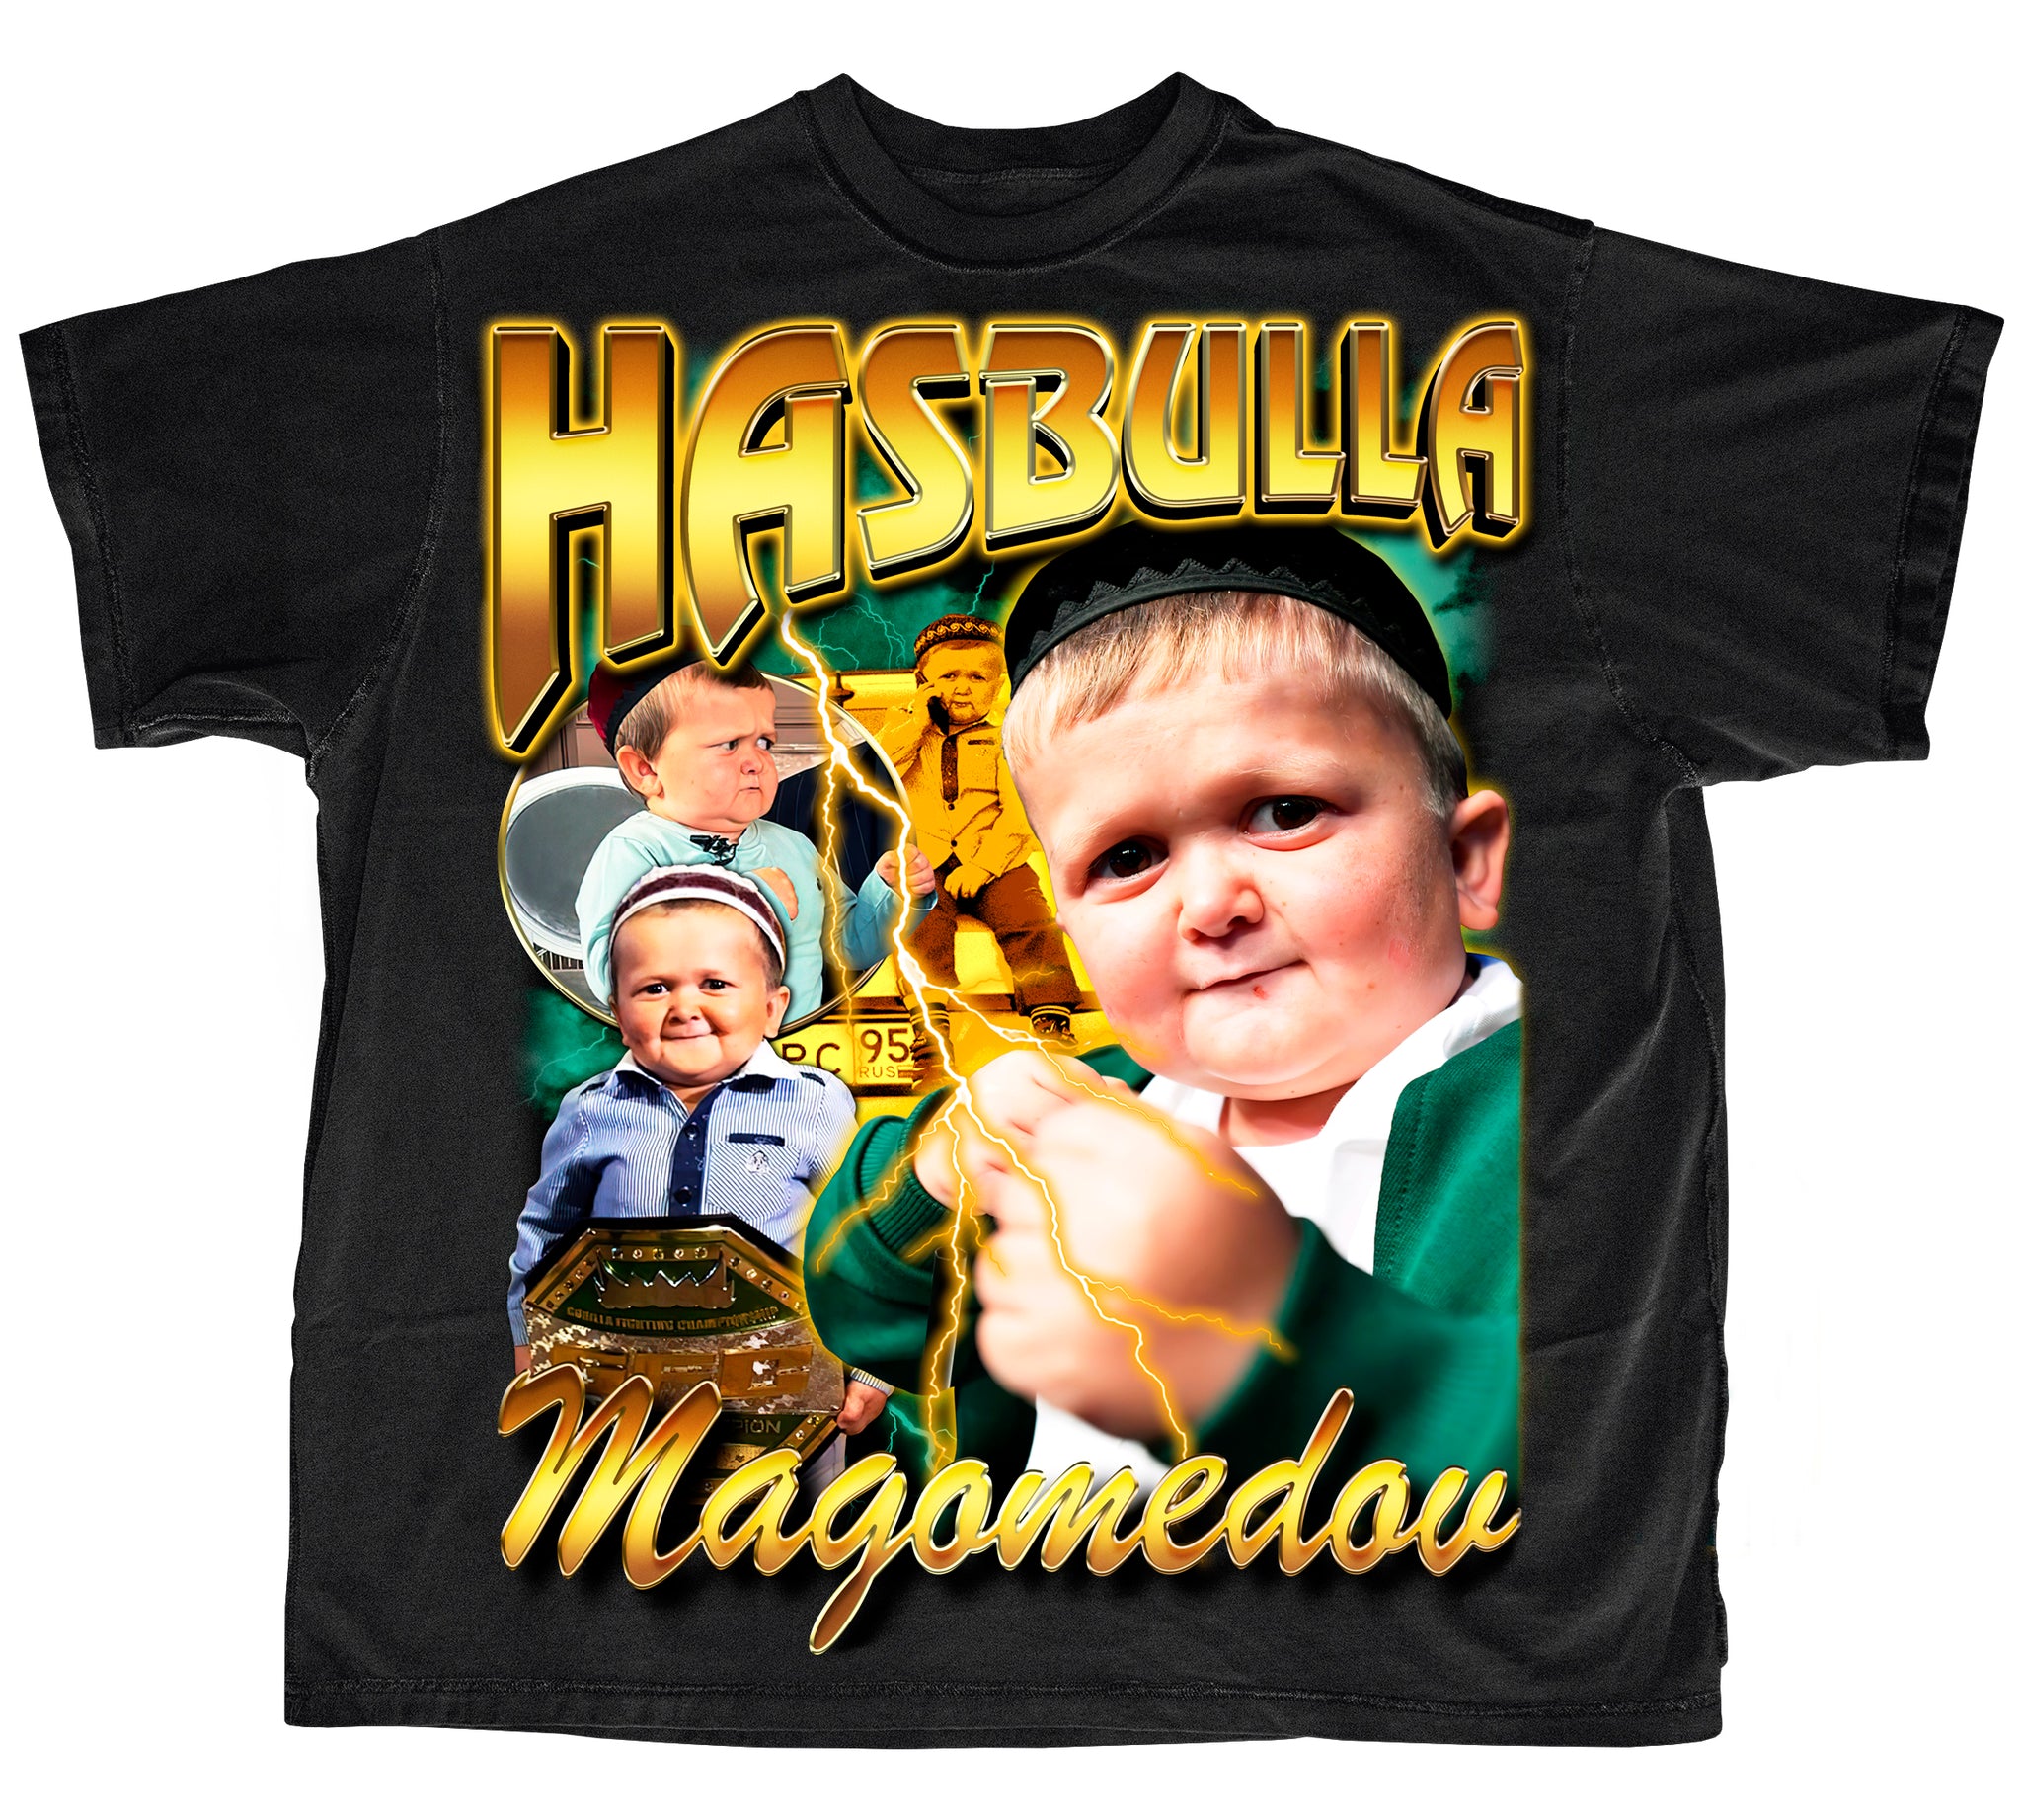 HASBULLA VINTAGE T-Shirt, KASH COLLECTIVE